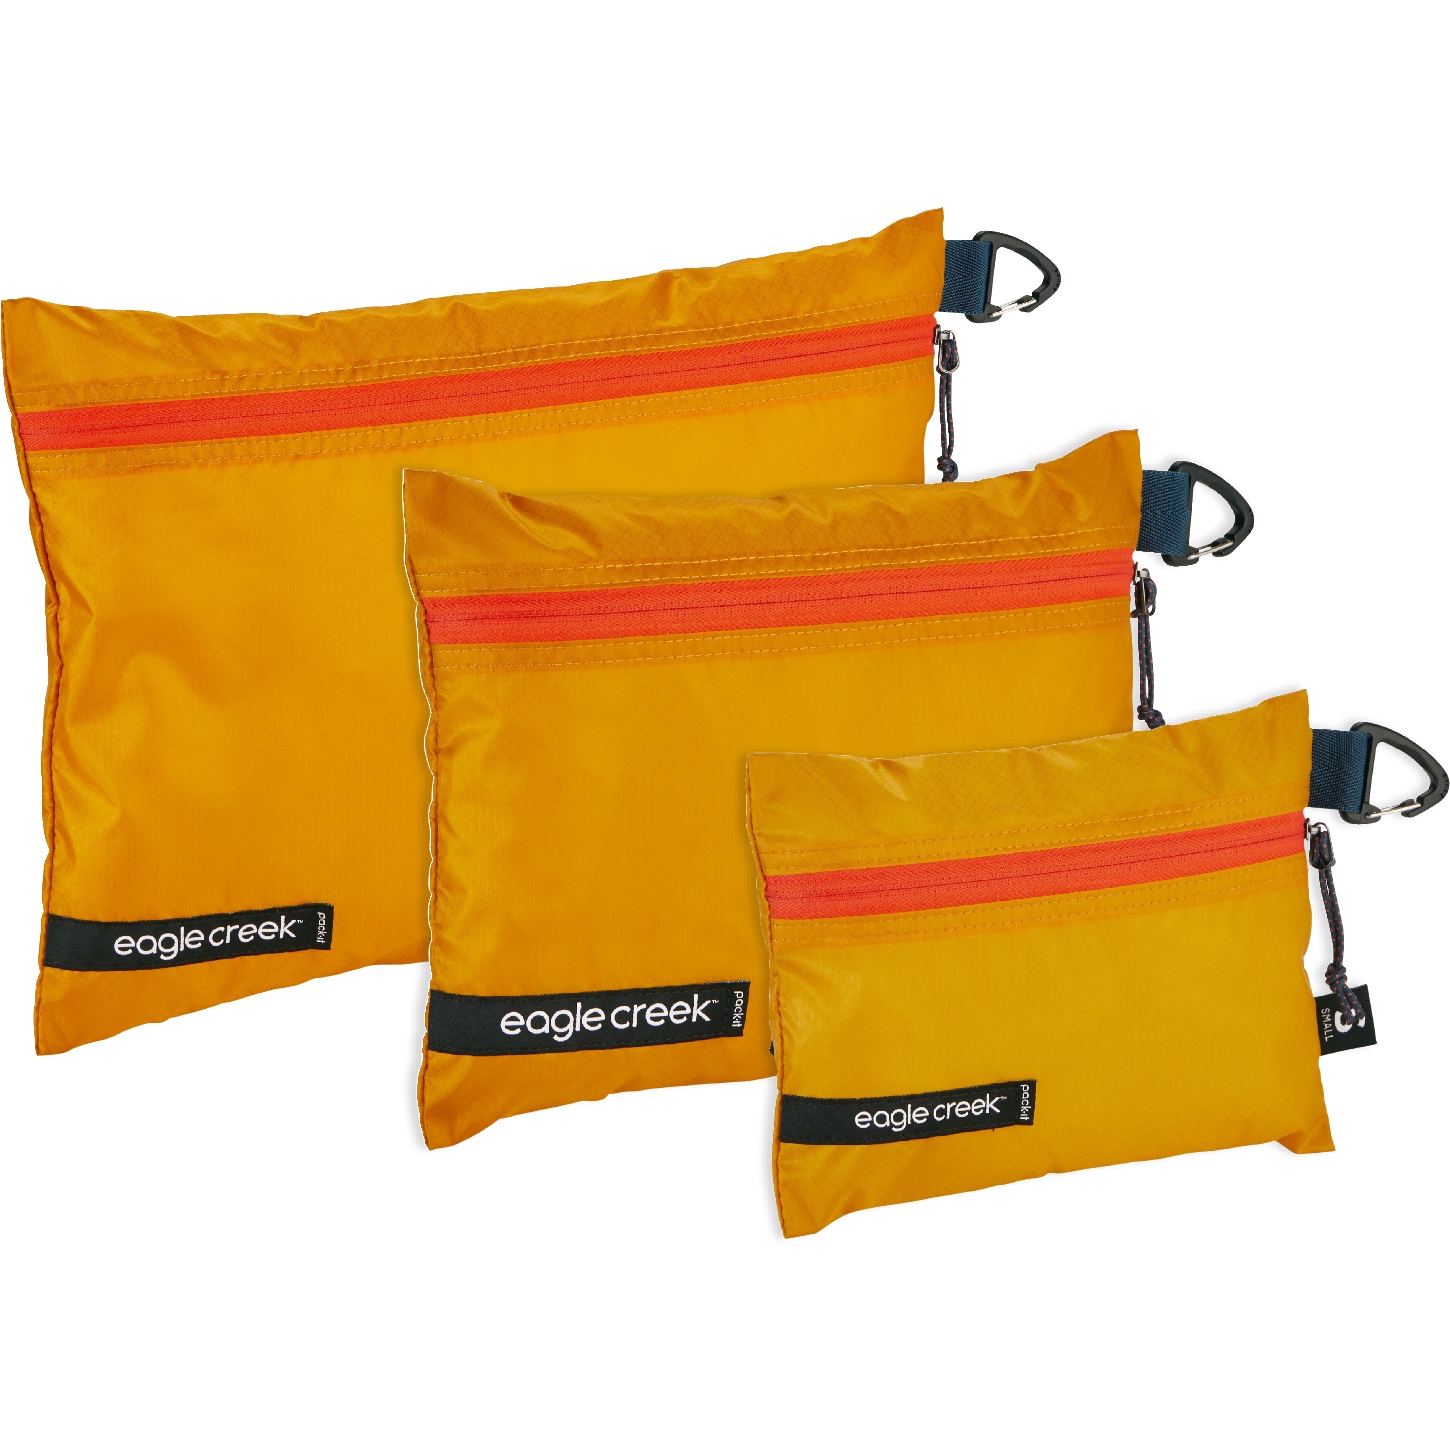 Productfoto van Eagle Creek Pack-It™ Isolate Sac Set S/M/L - Tas Organizer - sahara yellow